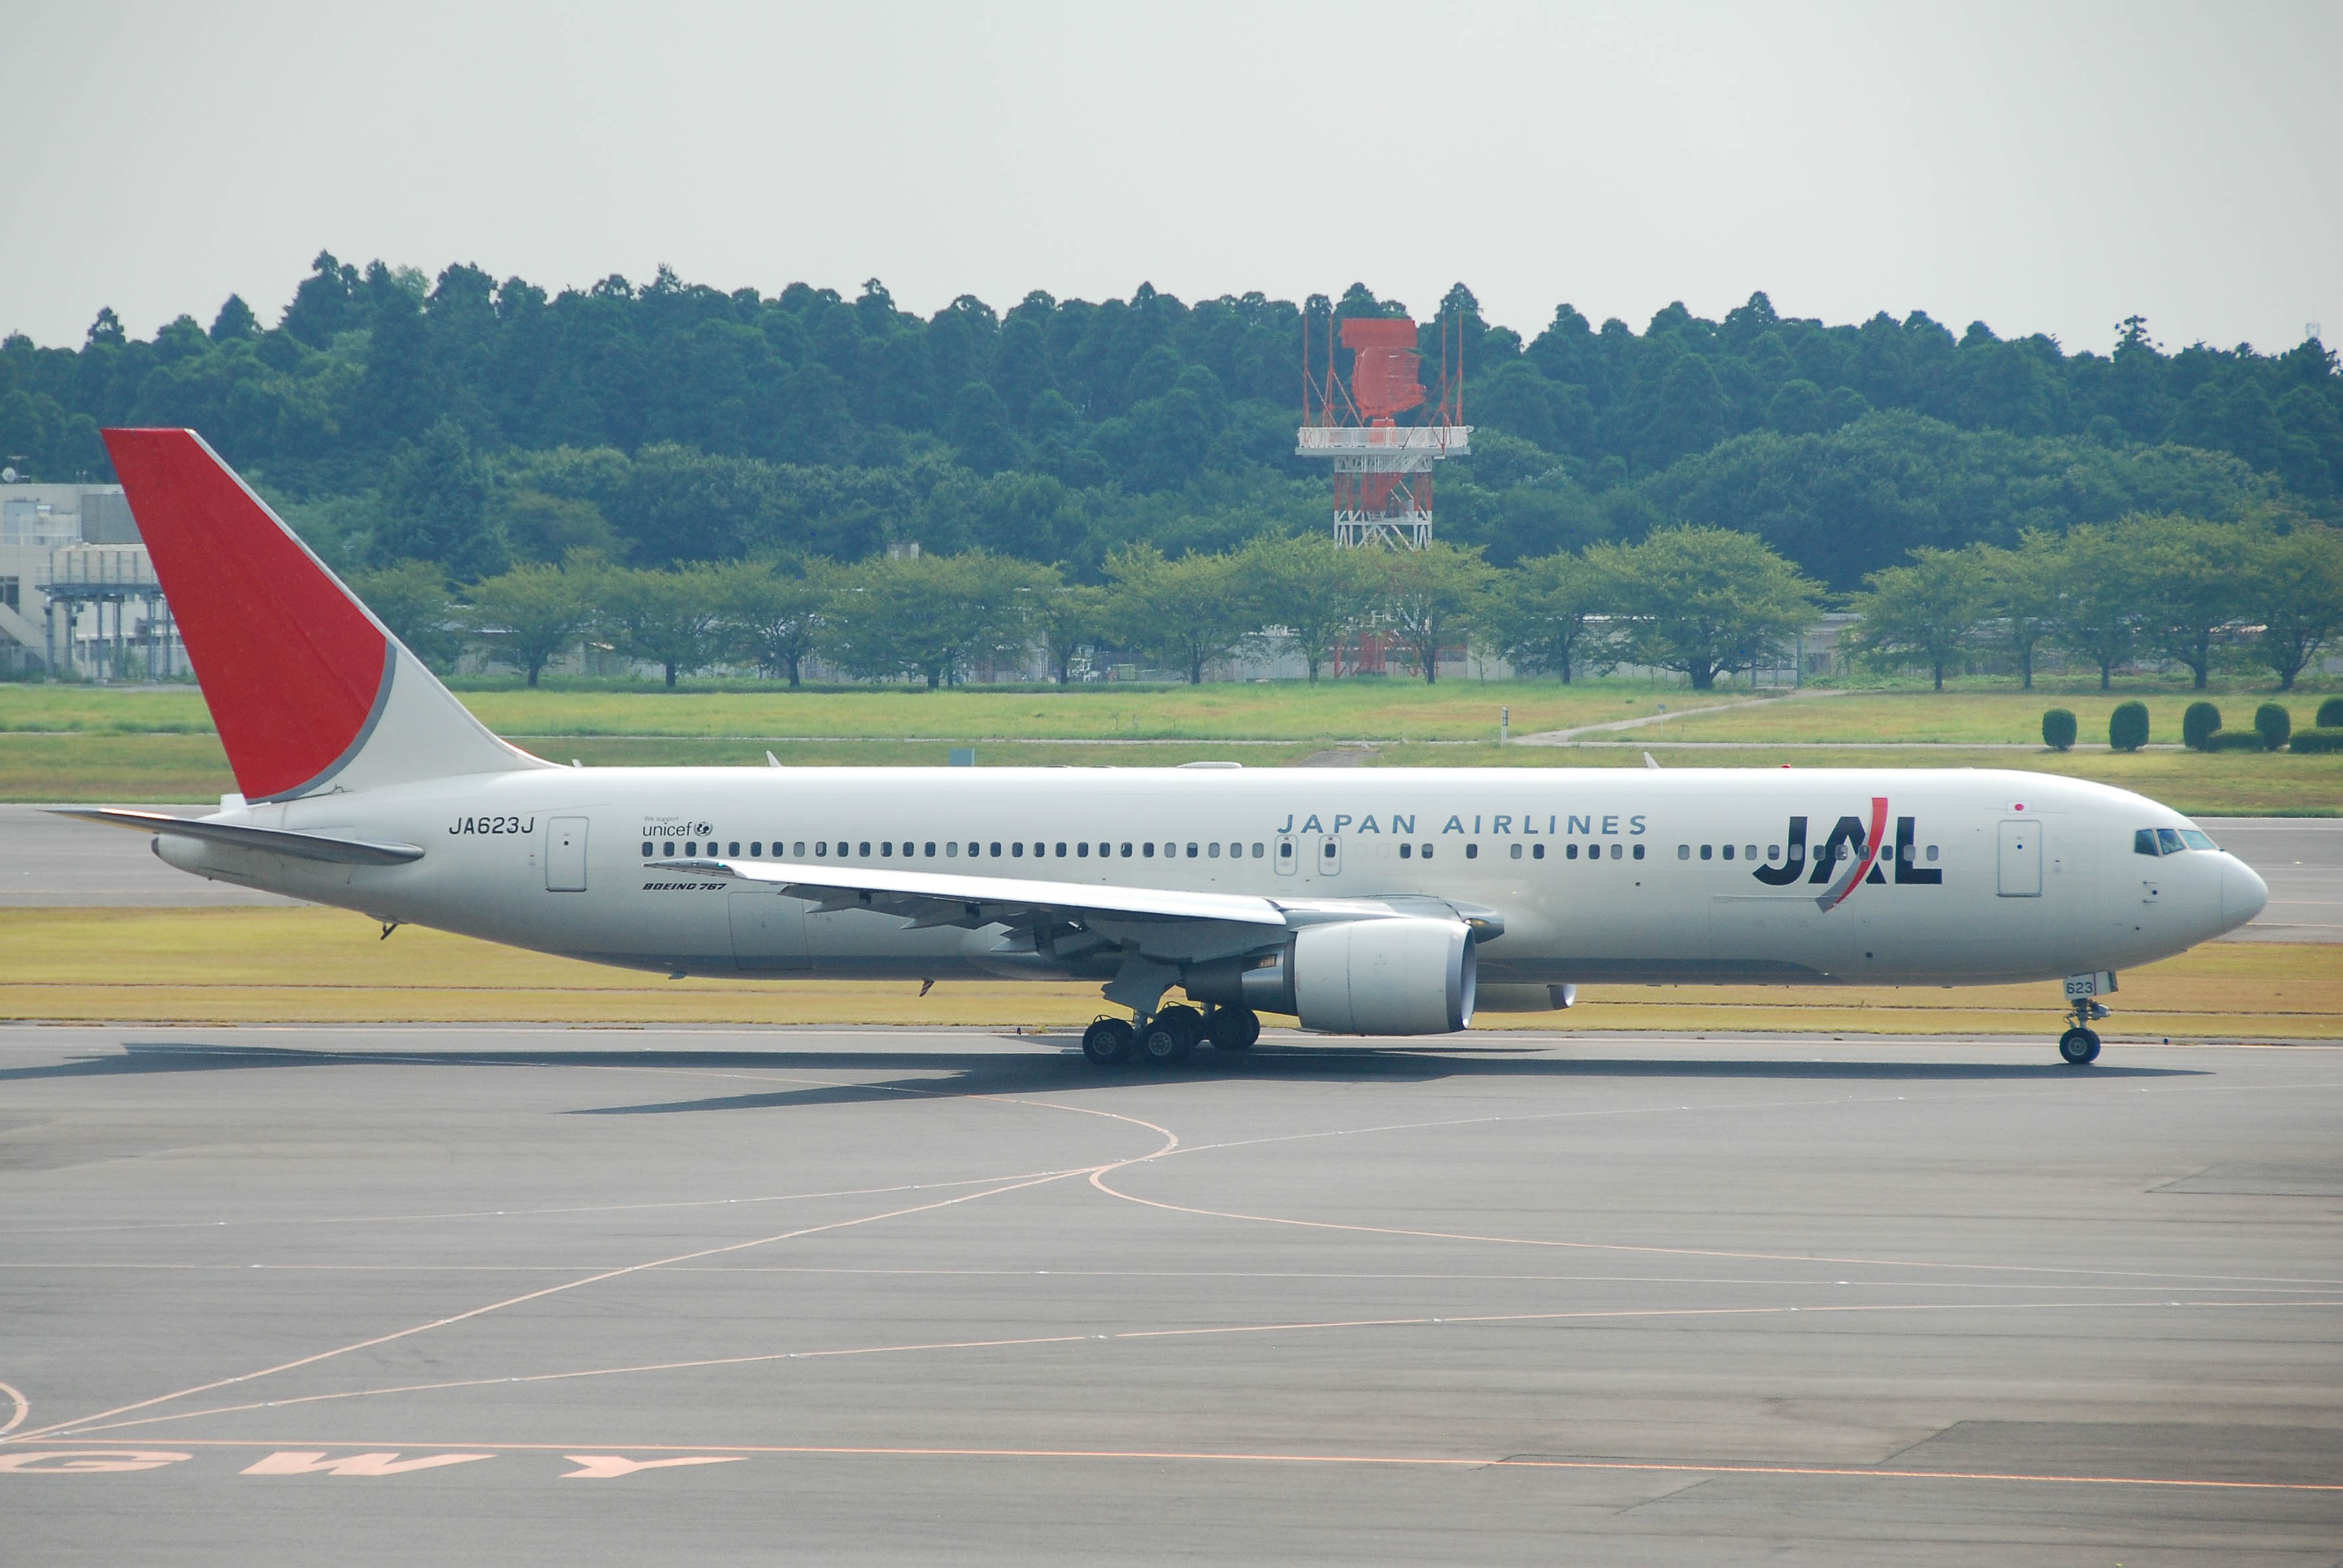 JA623J/JA623J Japan Airlines Boeing 767 Airframe Information - AVSpotters.com